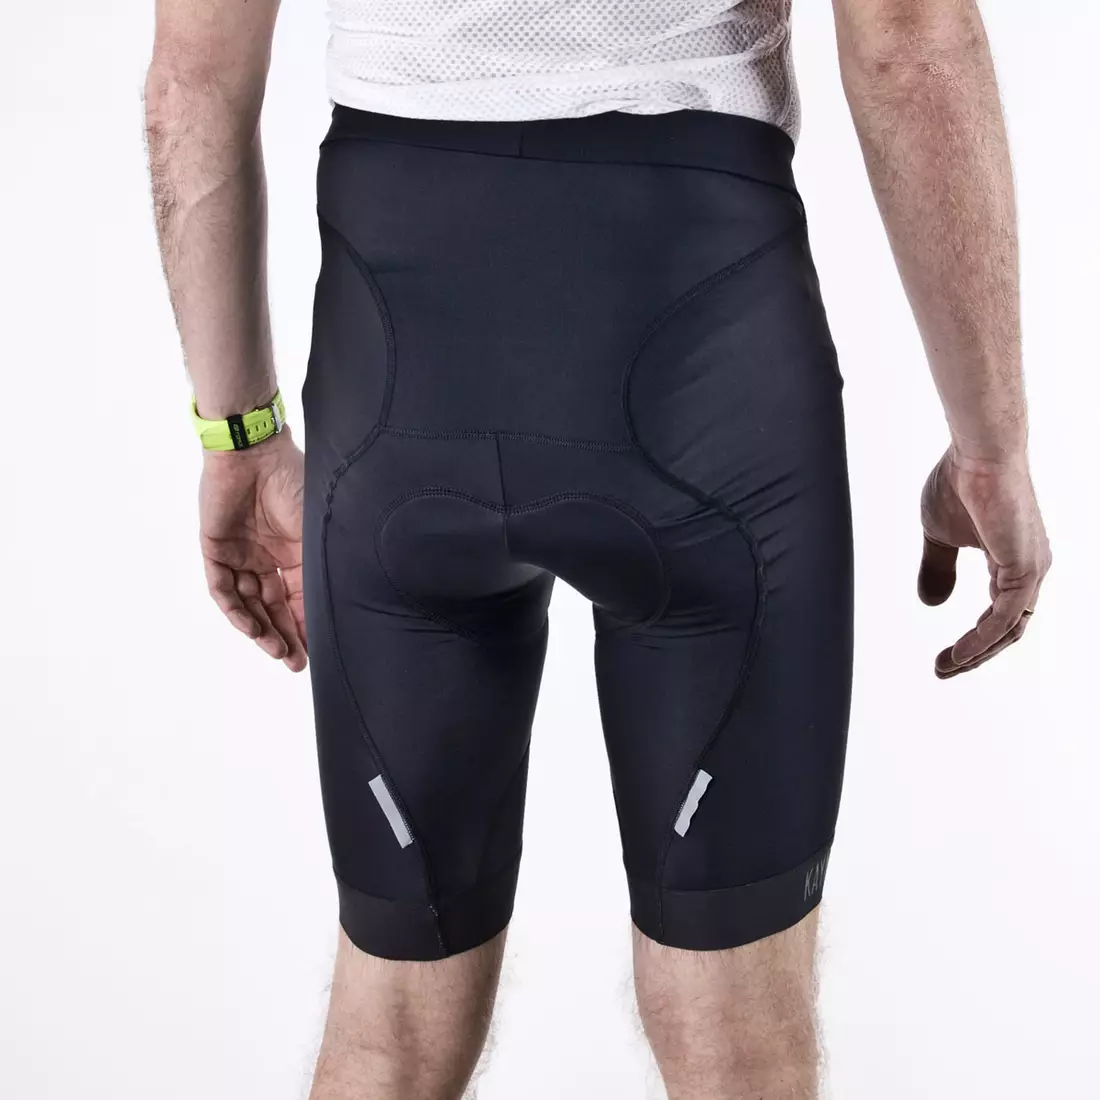 KAYMAQ PRO 30201 - men's bibless cycling shorts, HP Carbon, color: Black